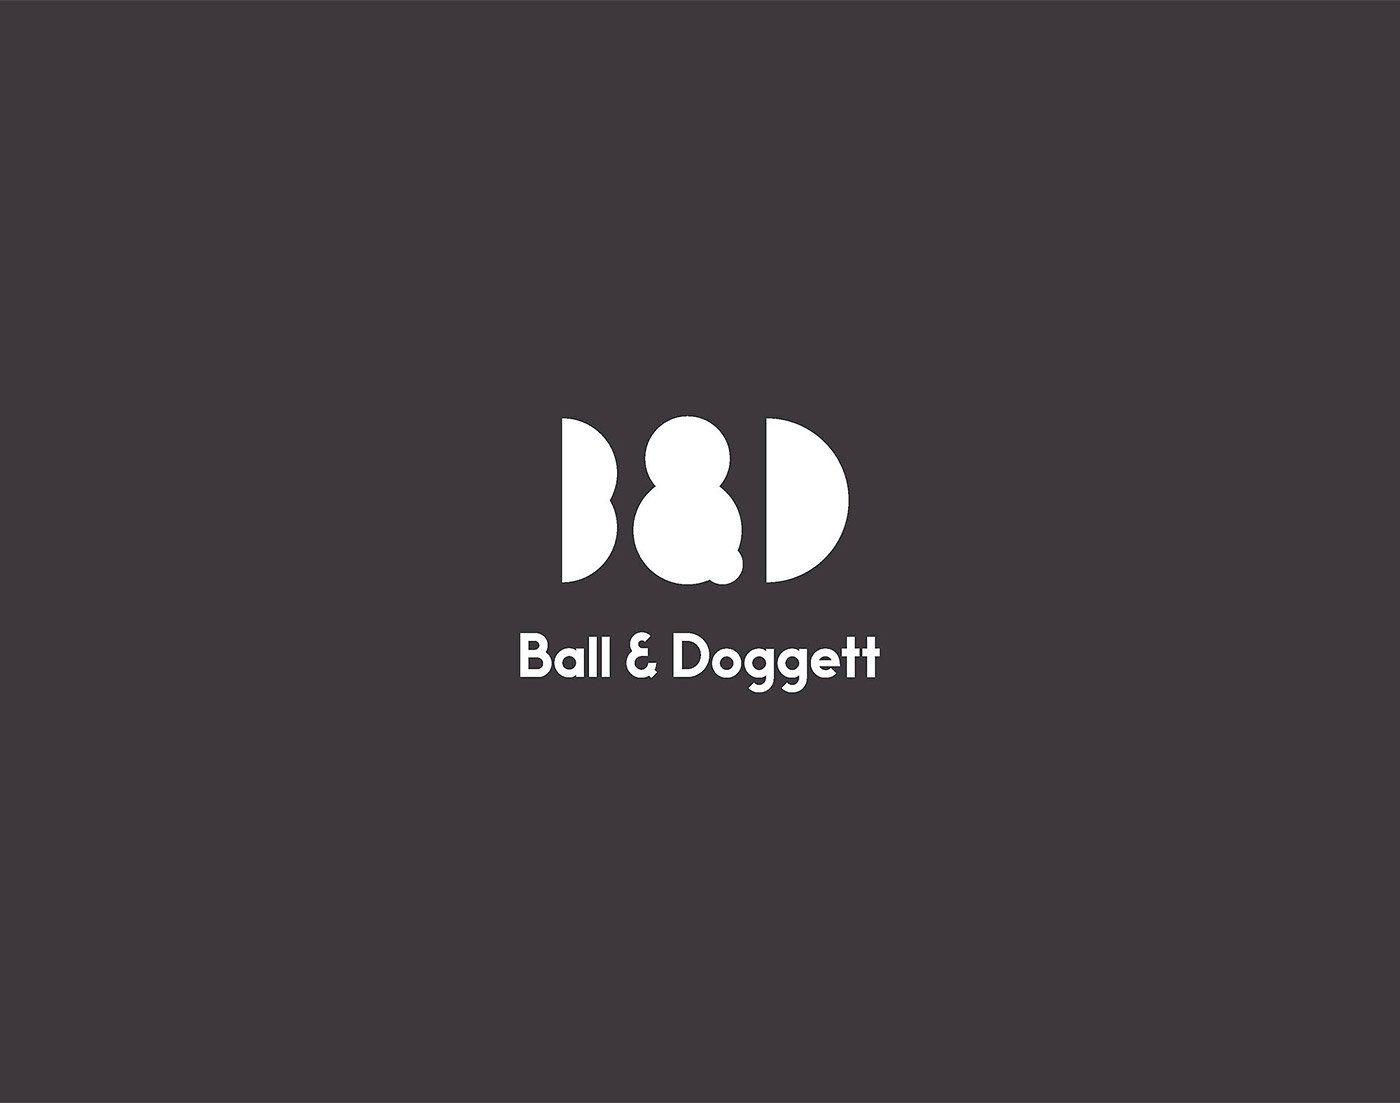 Doggett Logo - Ball & Doggett Branding by For The People | Logos / Branding ...